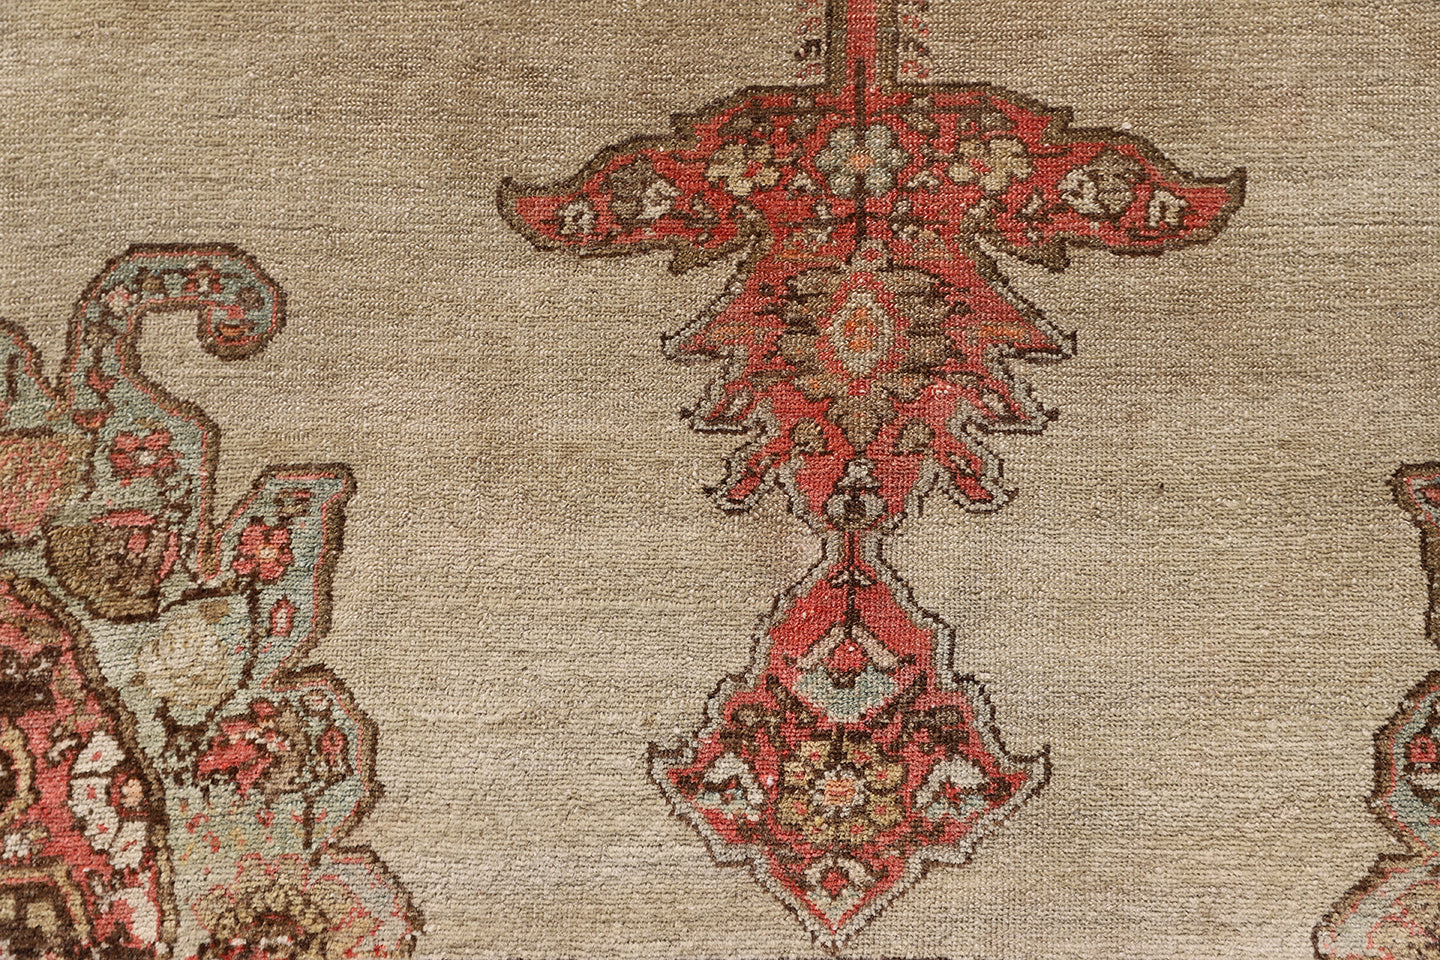 4'x6' Antique Persian Malayer Rug